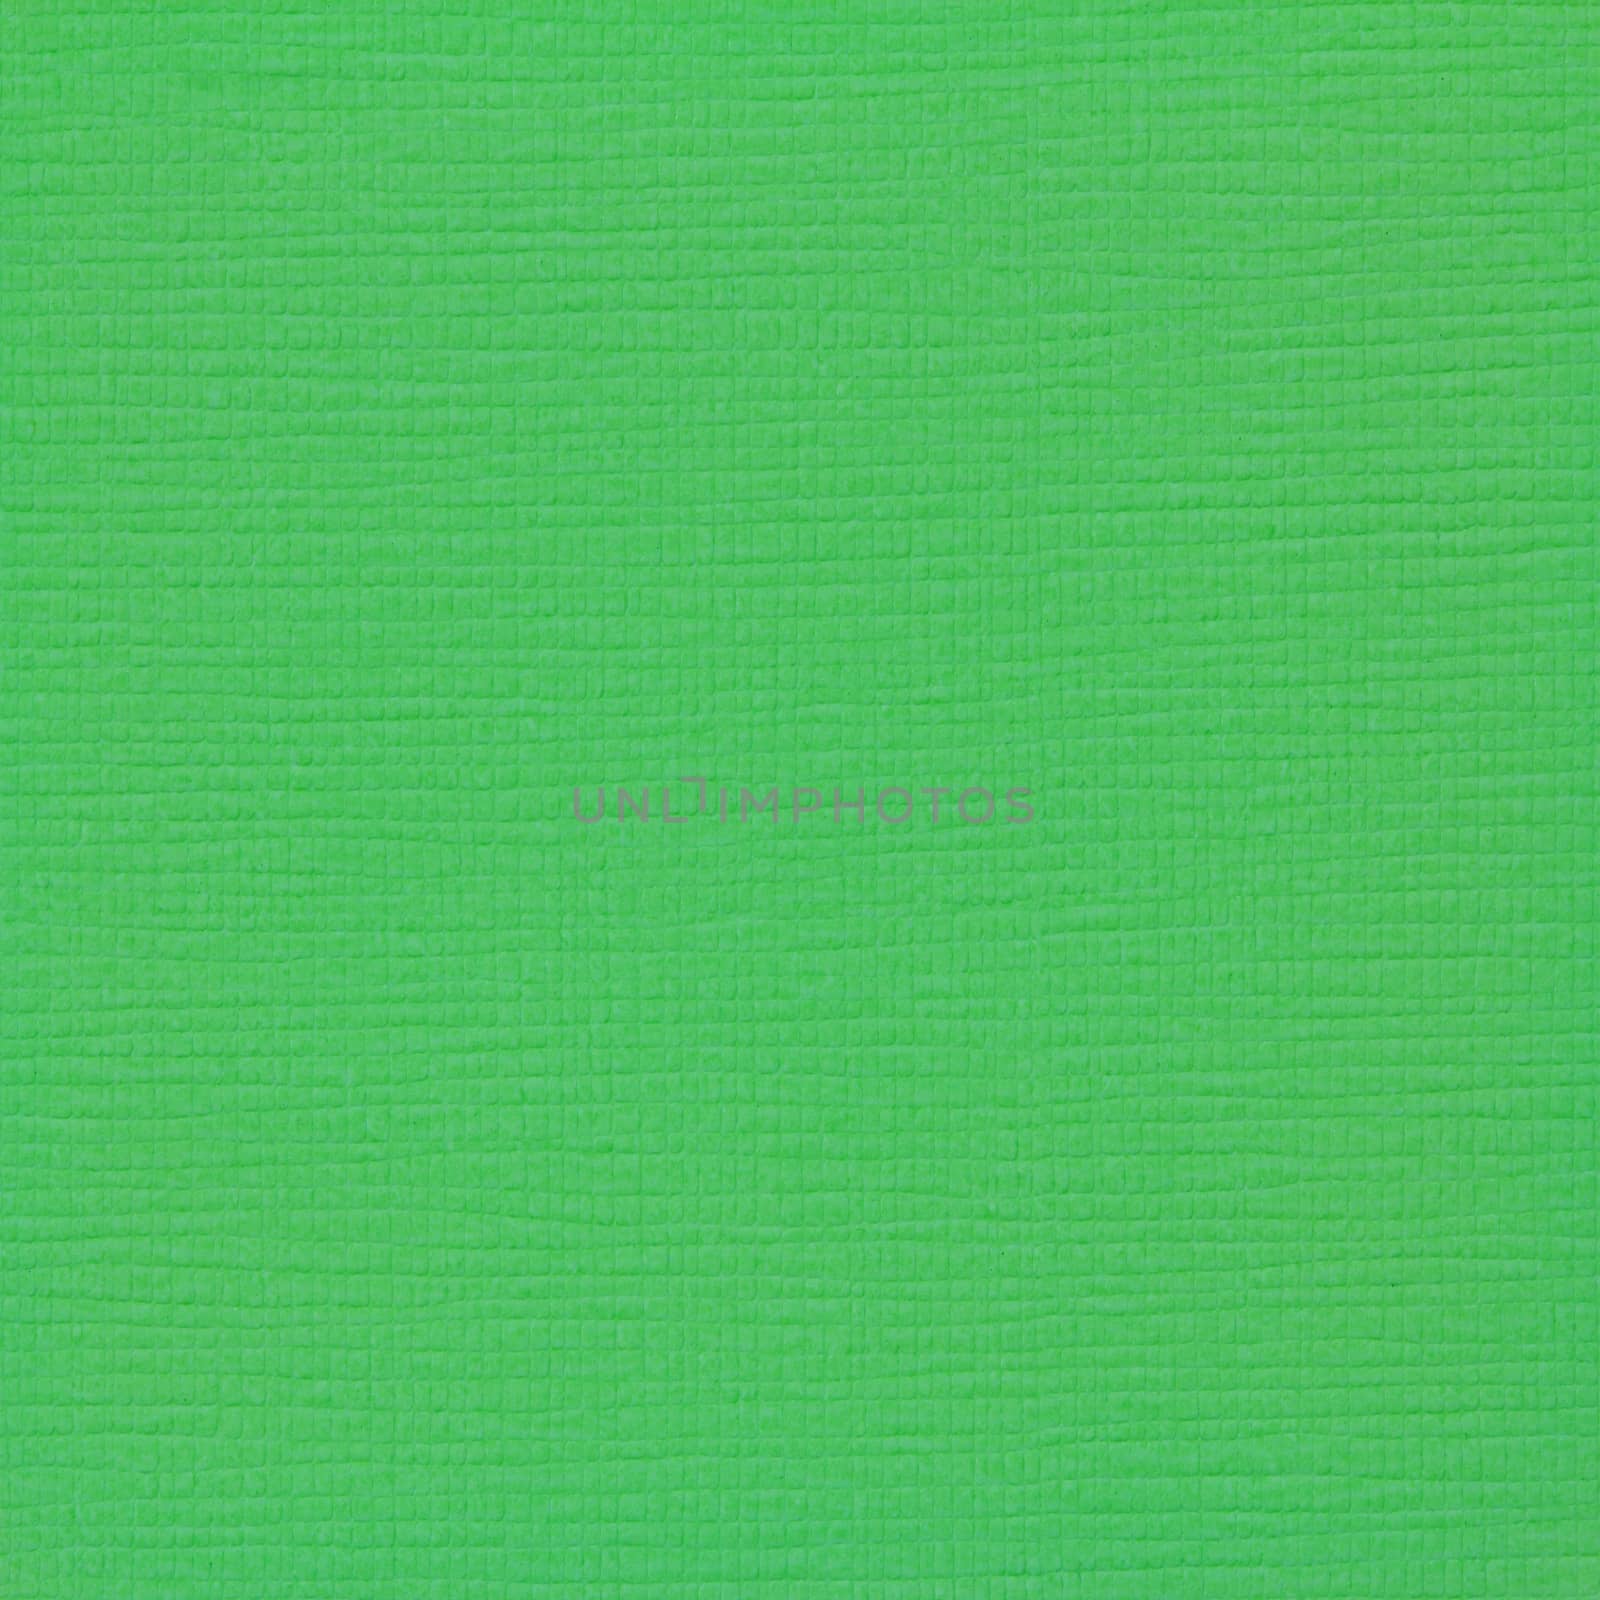 Green paper by wyoosumran